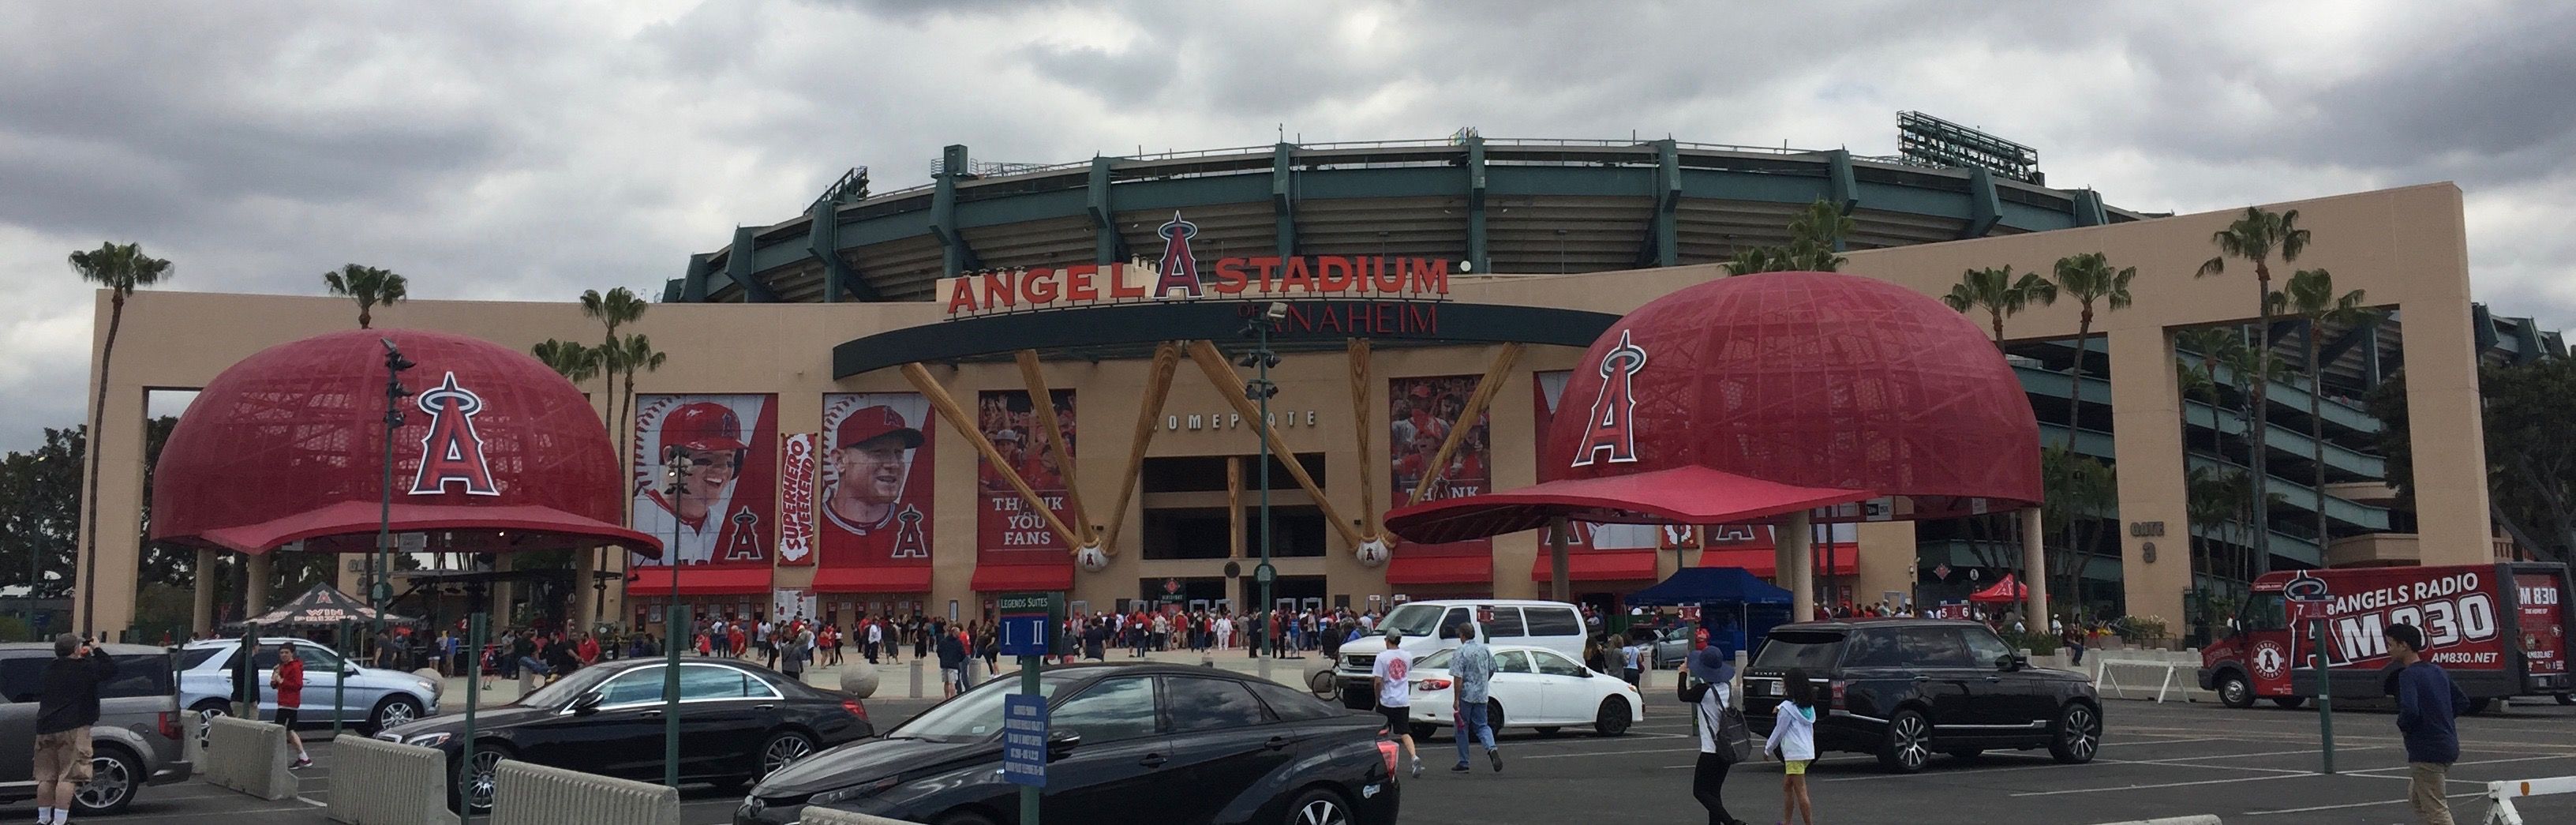 Exterior_of_Angel_Stadium,_Anaheim,_2017